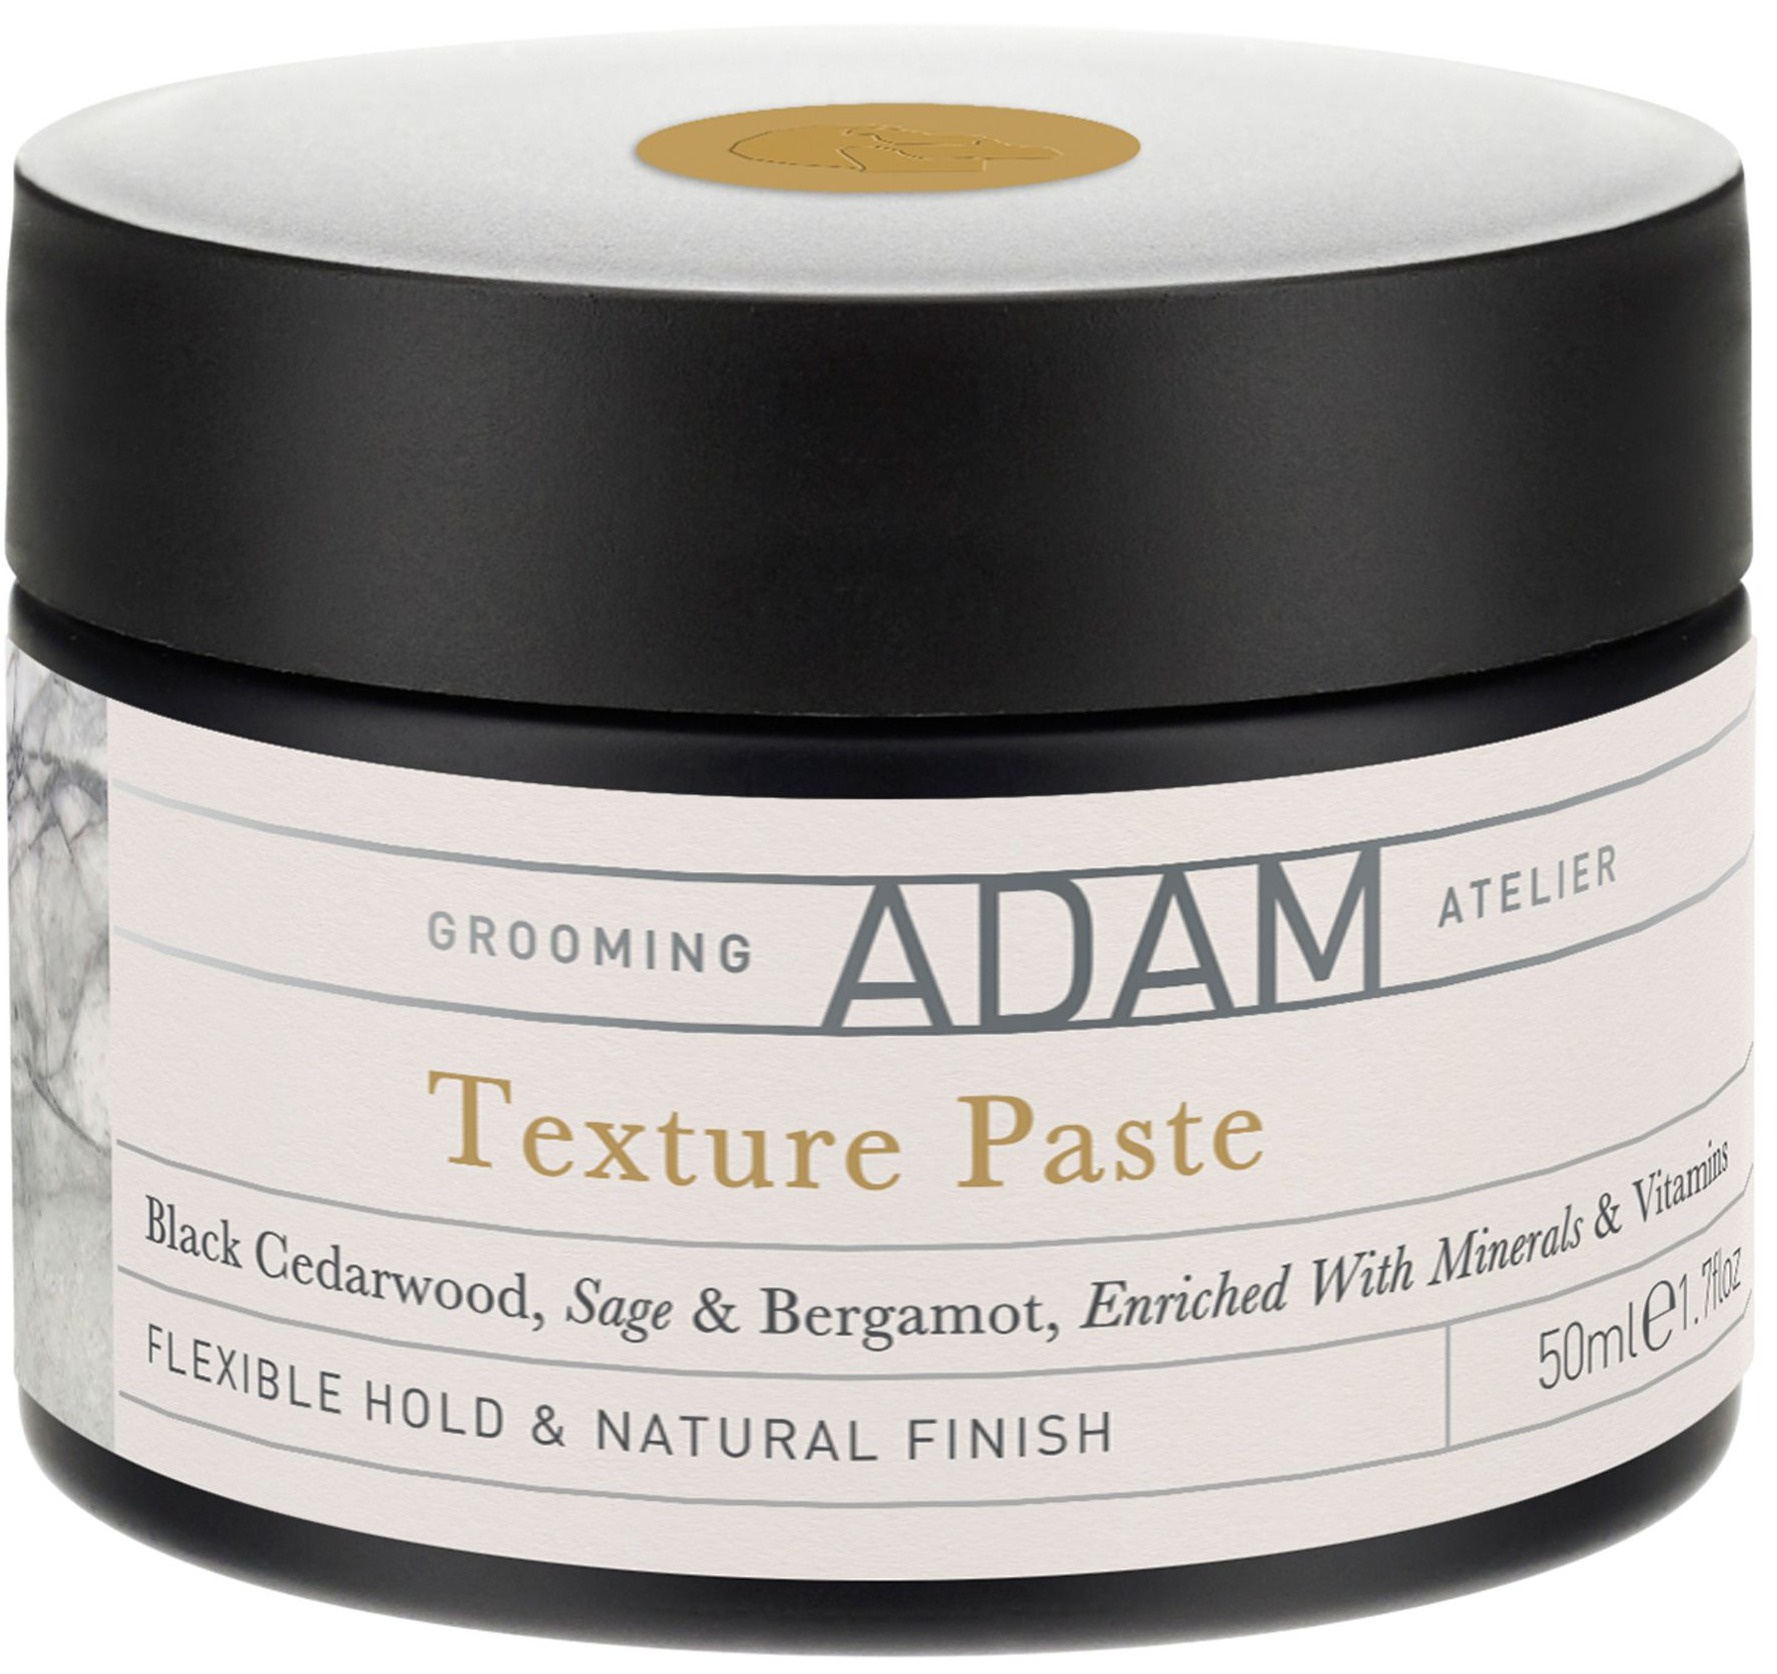 ADAM Grooming Atelier Texture Paste